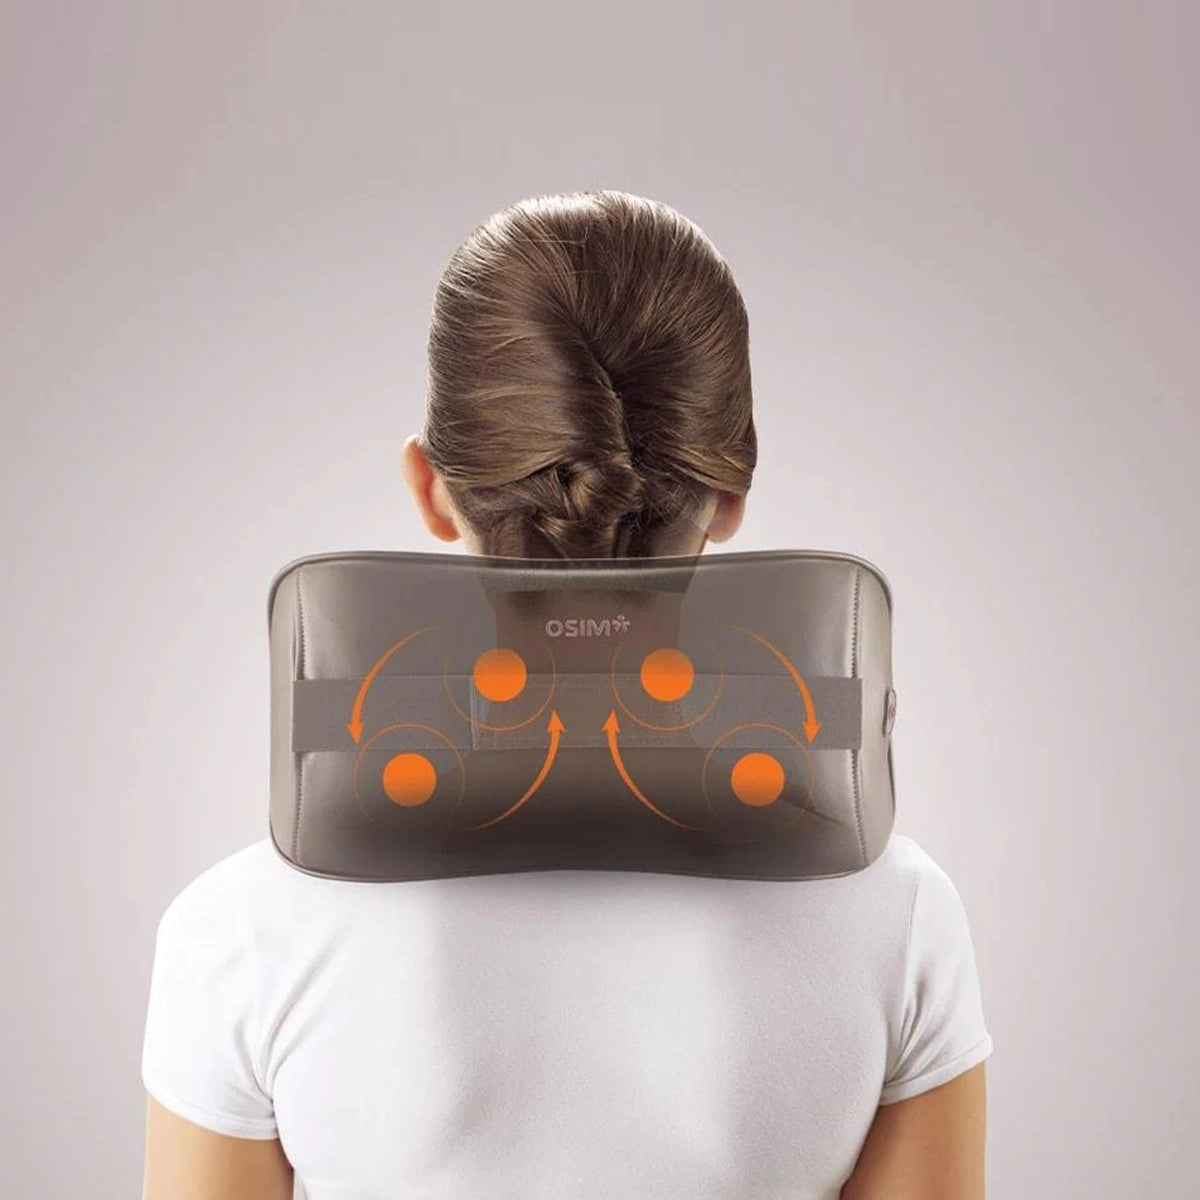 uCozy 3D Shoulder Massager by OSIM Use Case view